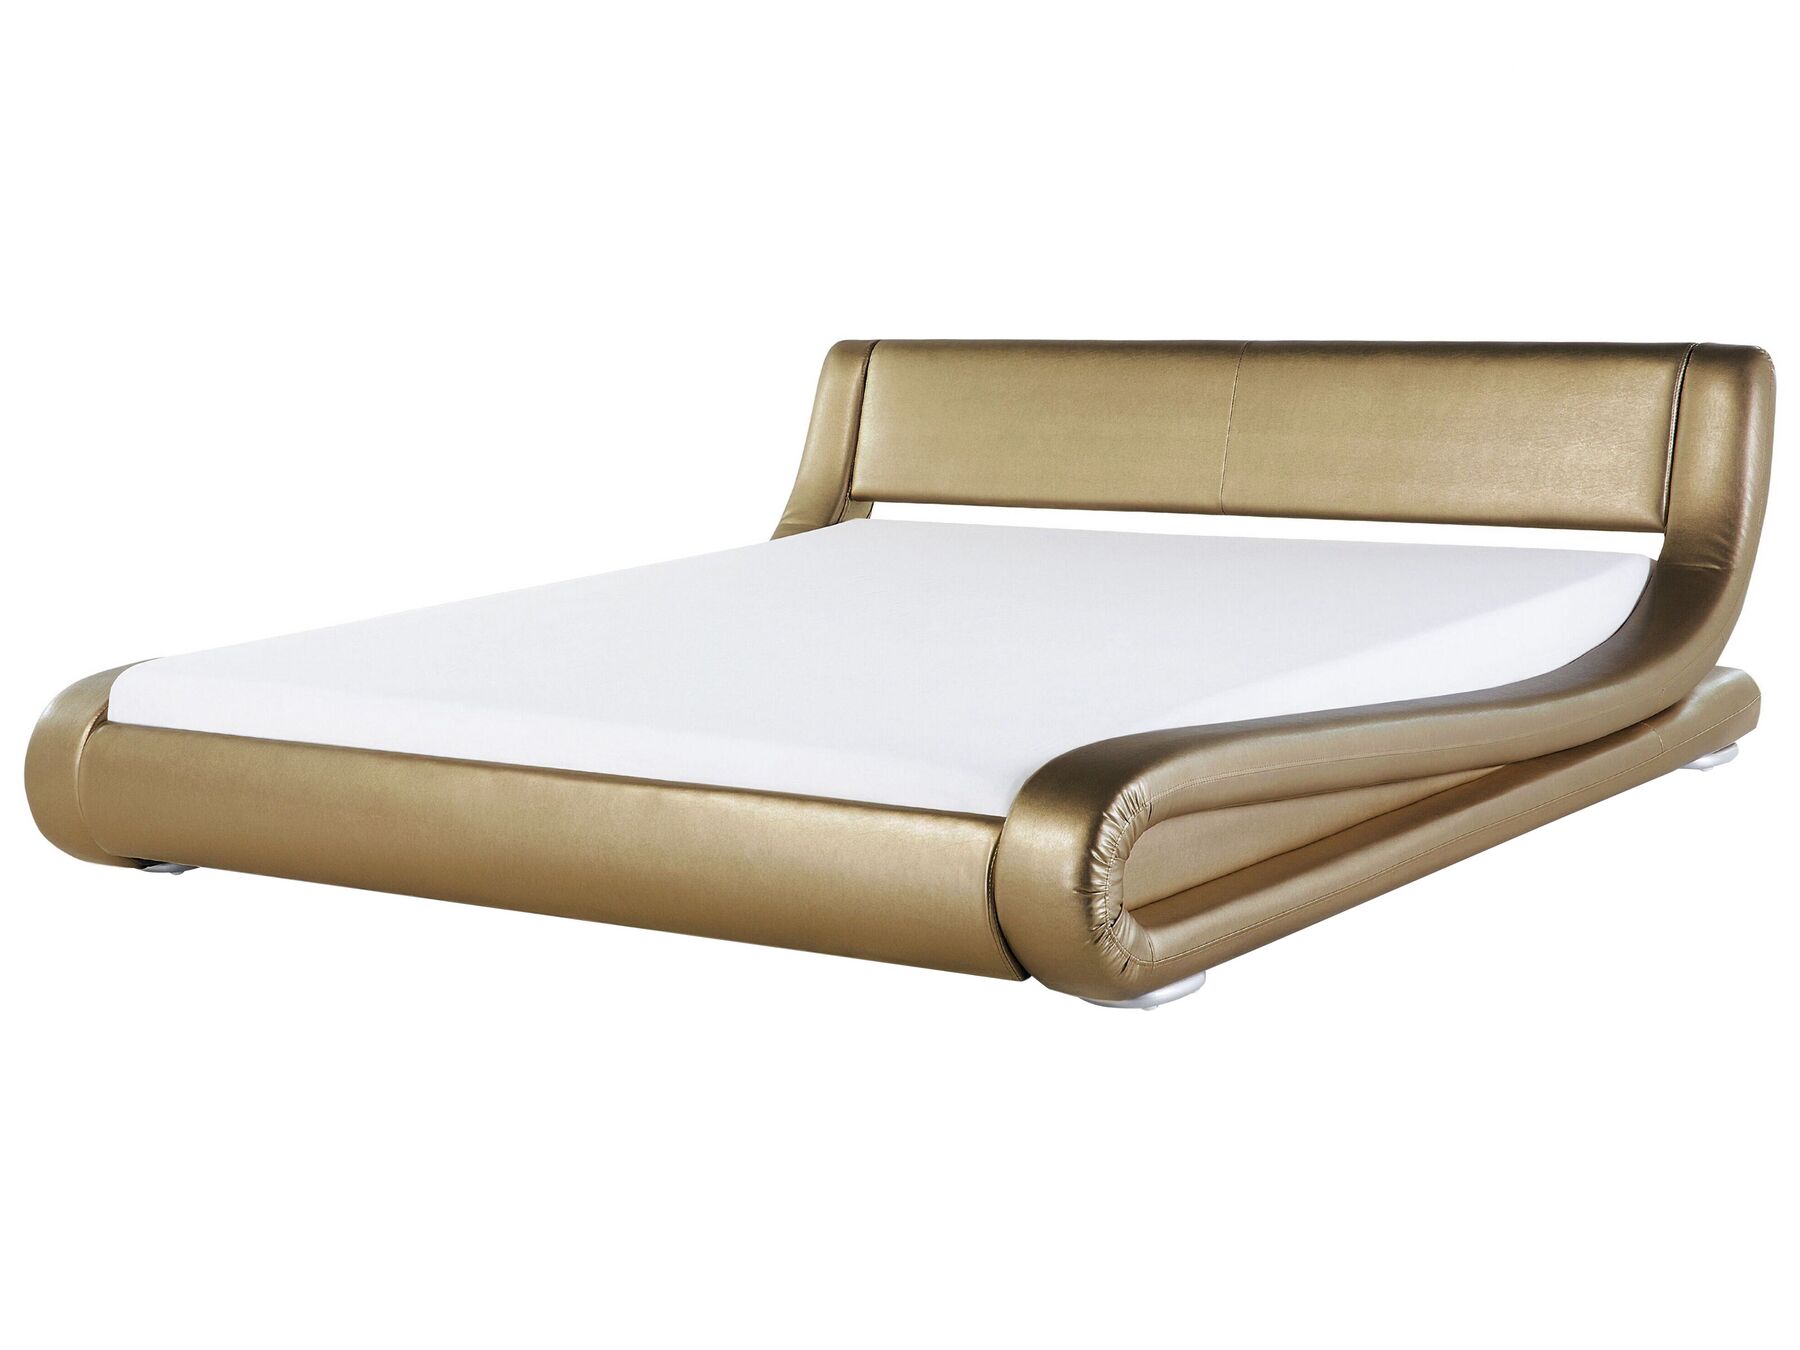 AVIGNON bőr designer ágy (arany) 180 x 200 cm  3560-61 B